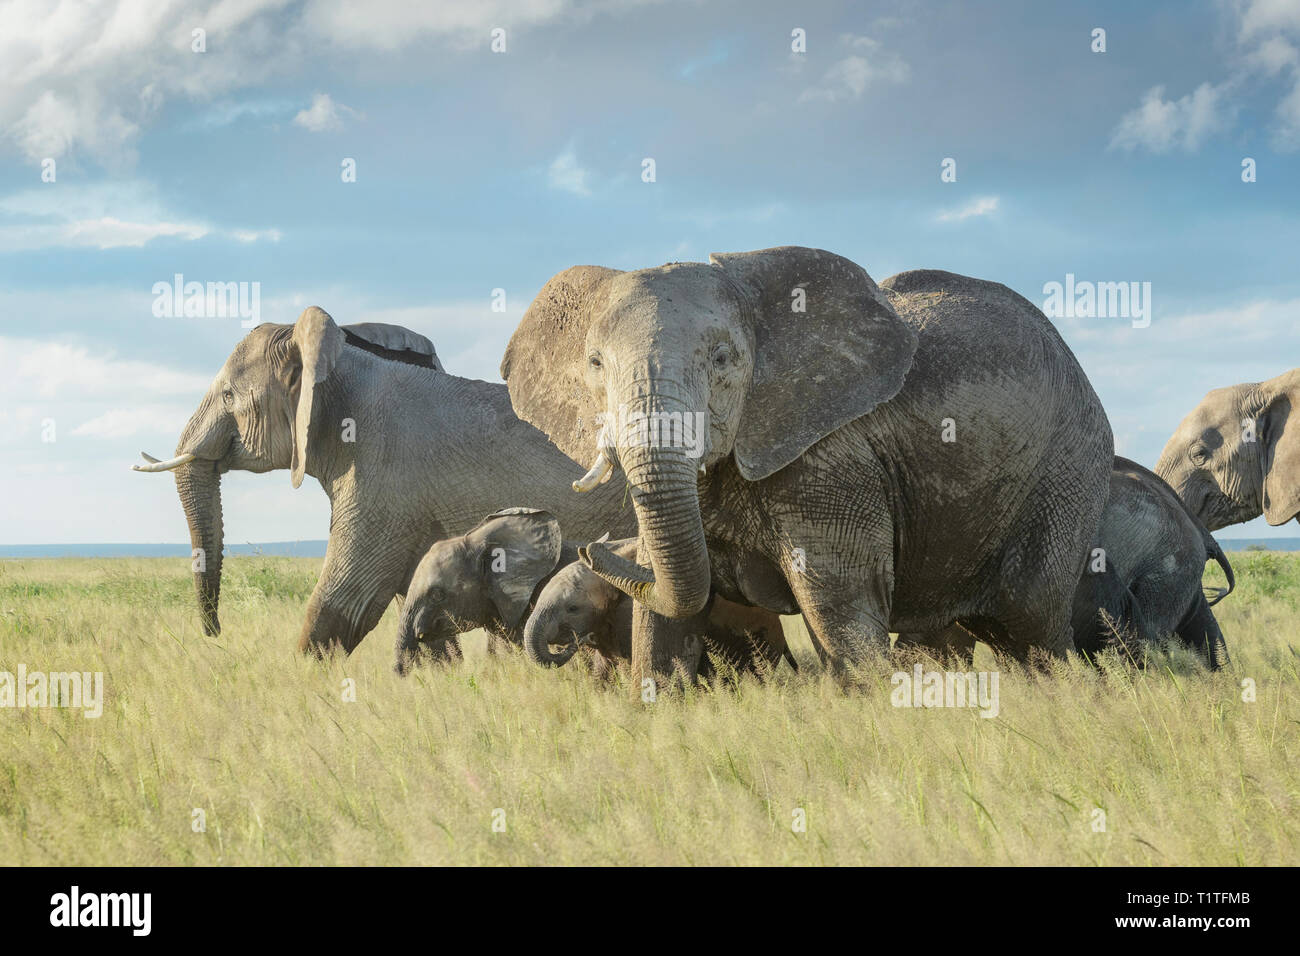 African elephant (Loxodonta africana) herd walking in grassland, protecting the calfs, looking at camera, Amboseli national park, Kenya. Stock Photo